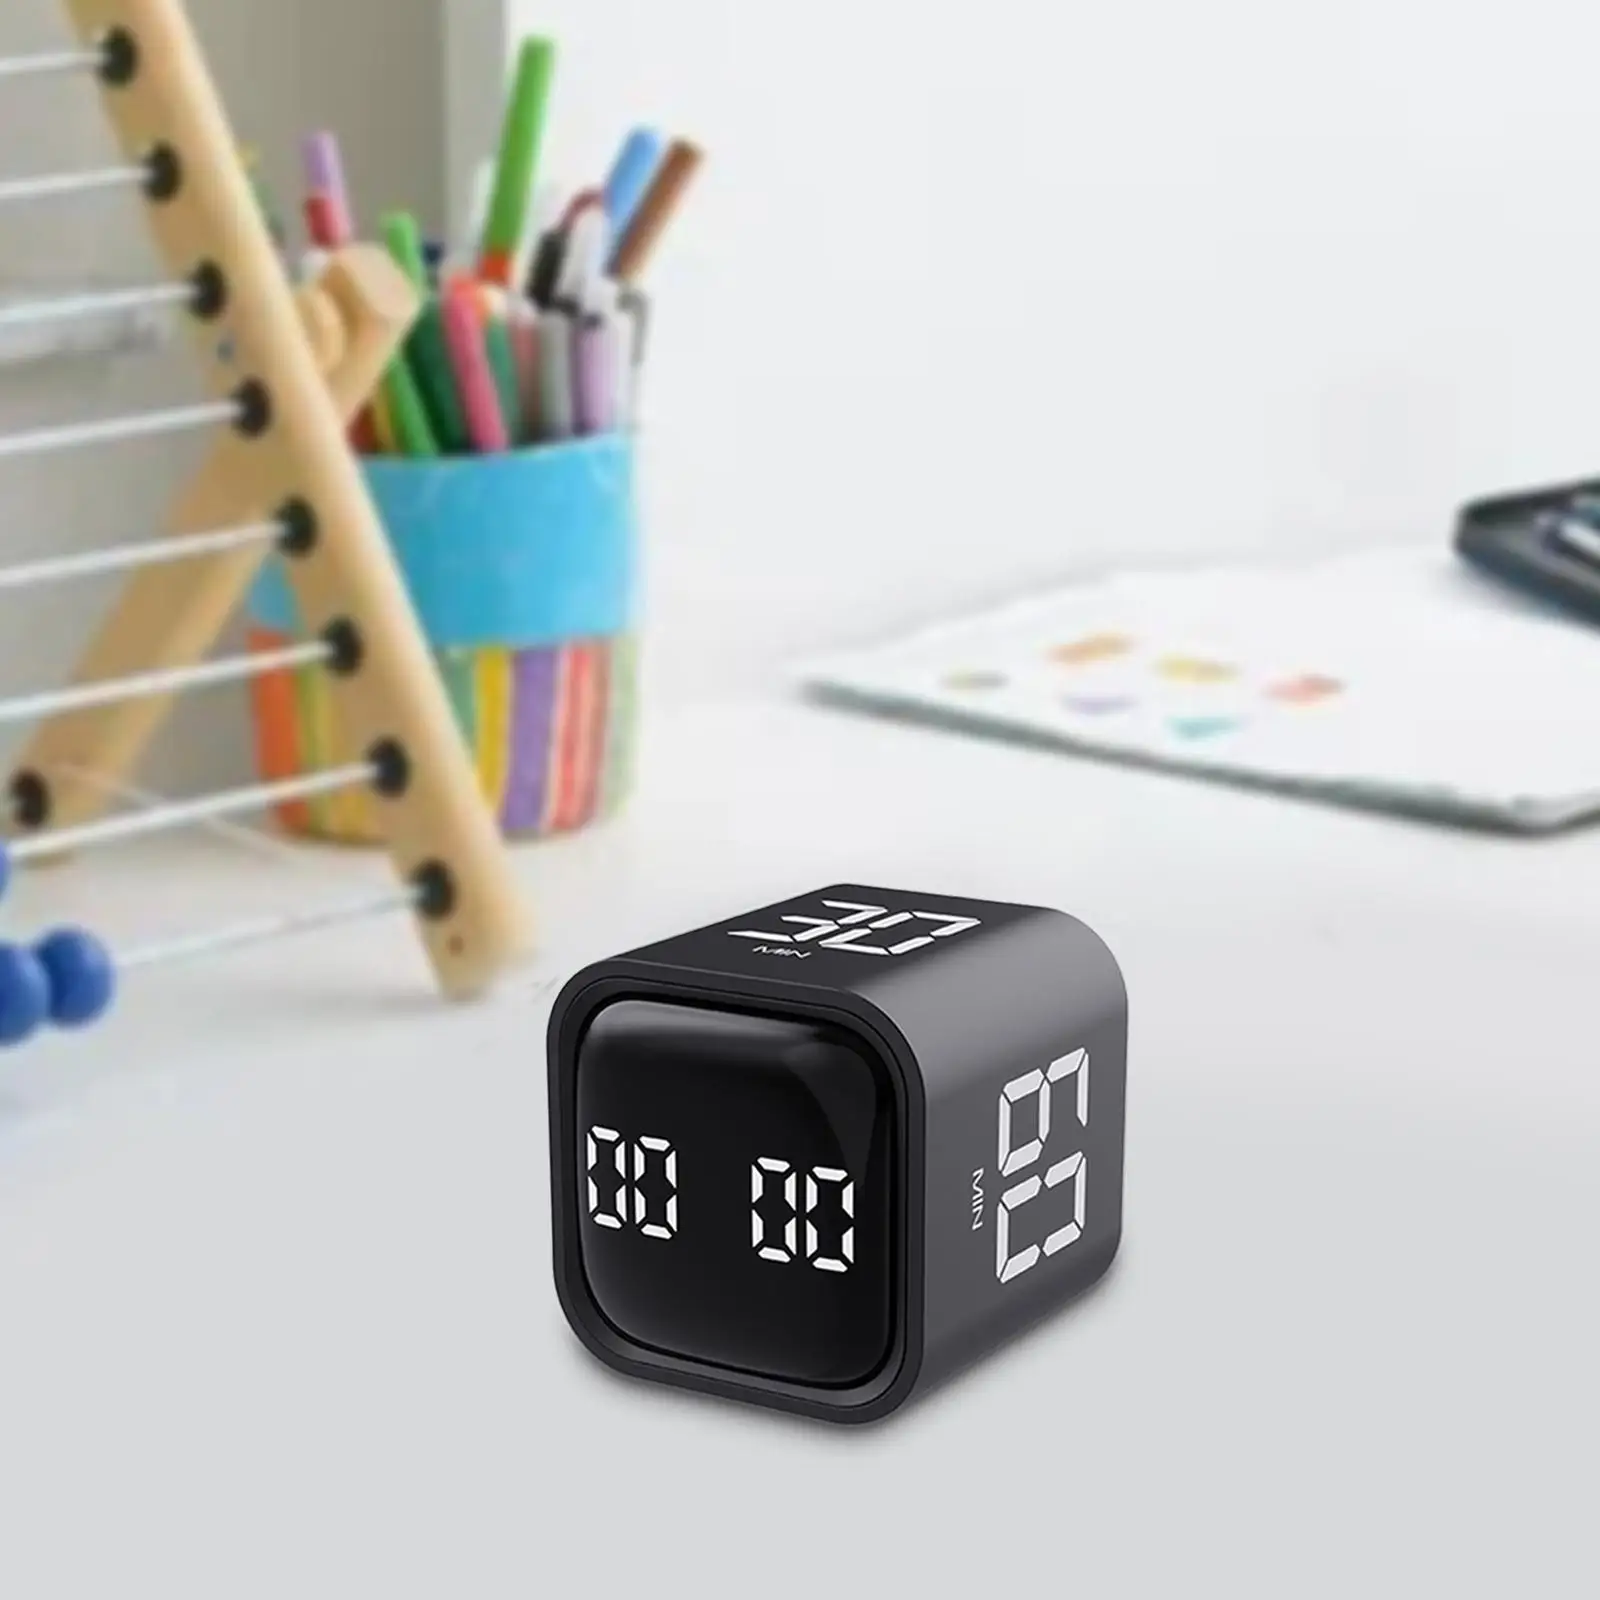 Cube timers Gravity Sensor Setting Management Flip Timer Game Timer for Exercise Cooking Baking Office